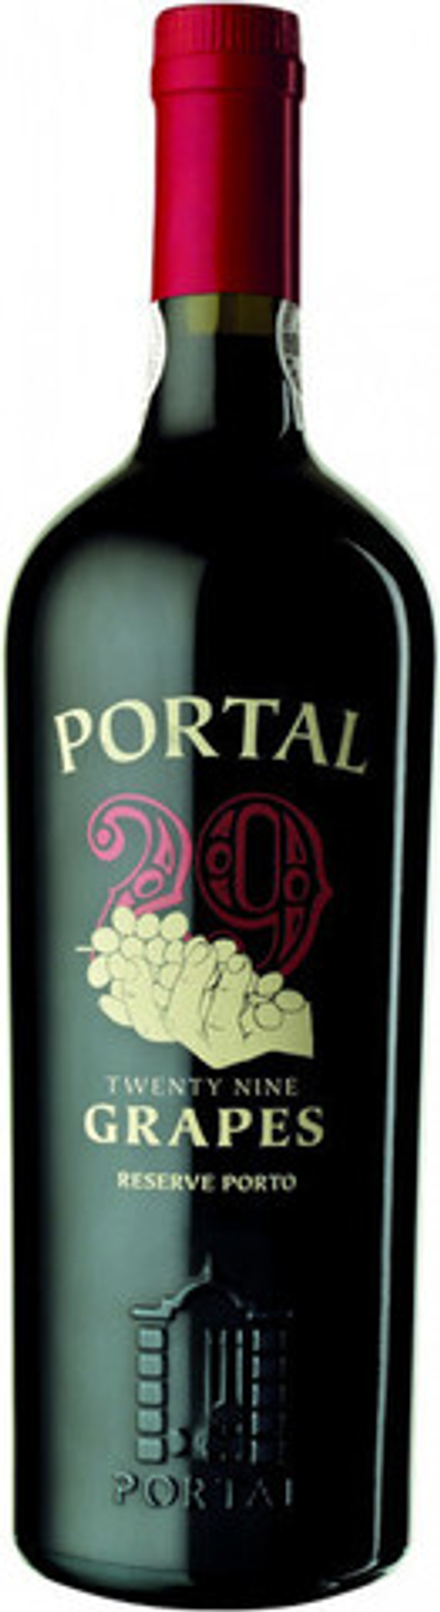 Вино Quinta do Portal Twenty Nine Grapes Reserve Porto, 0,75 л.